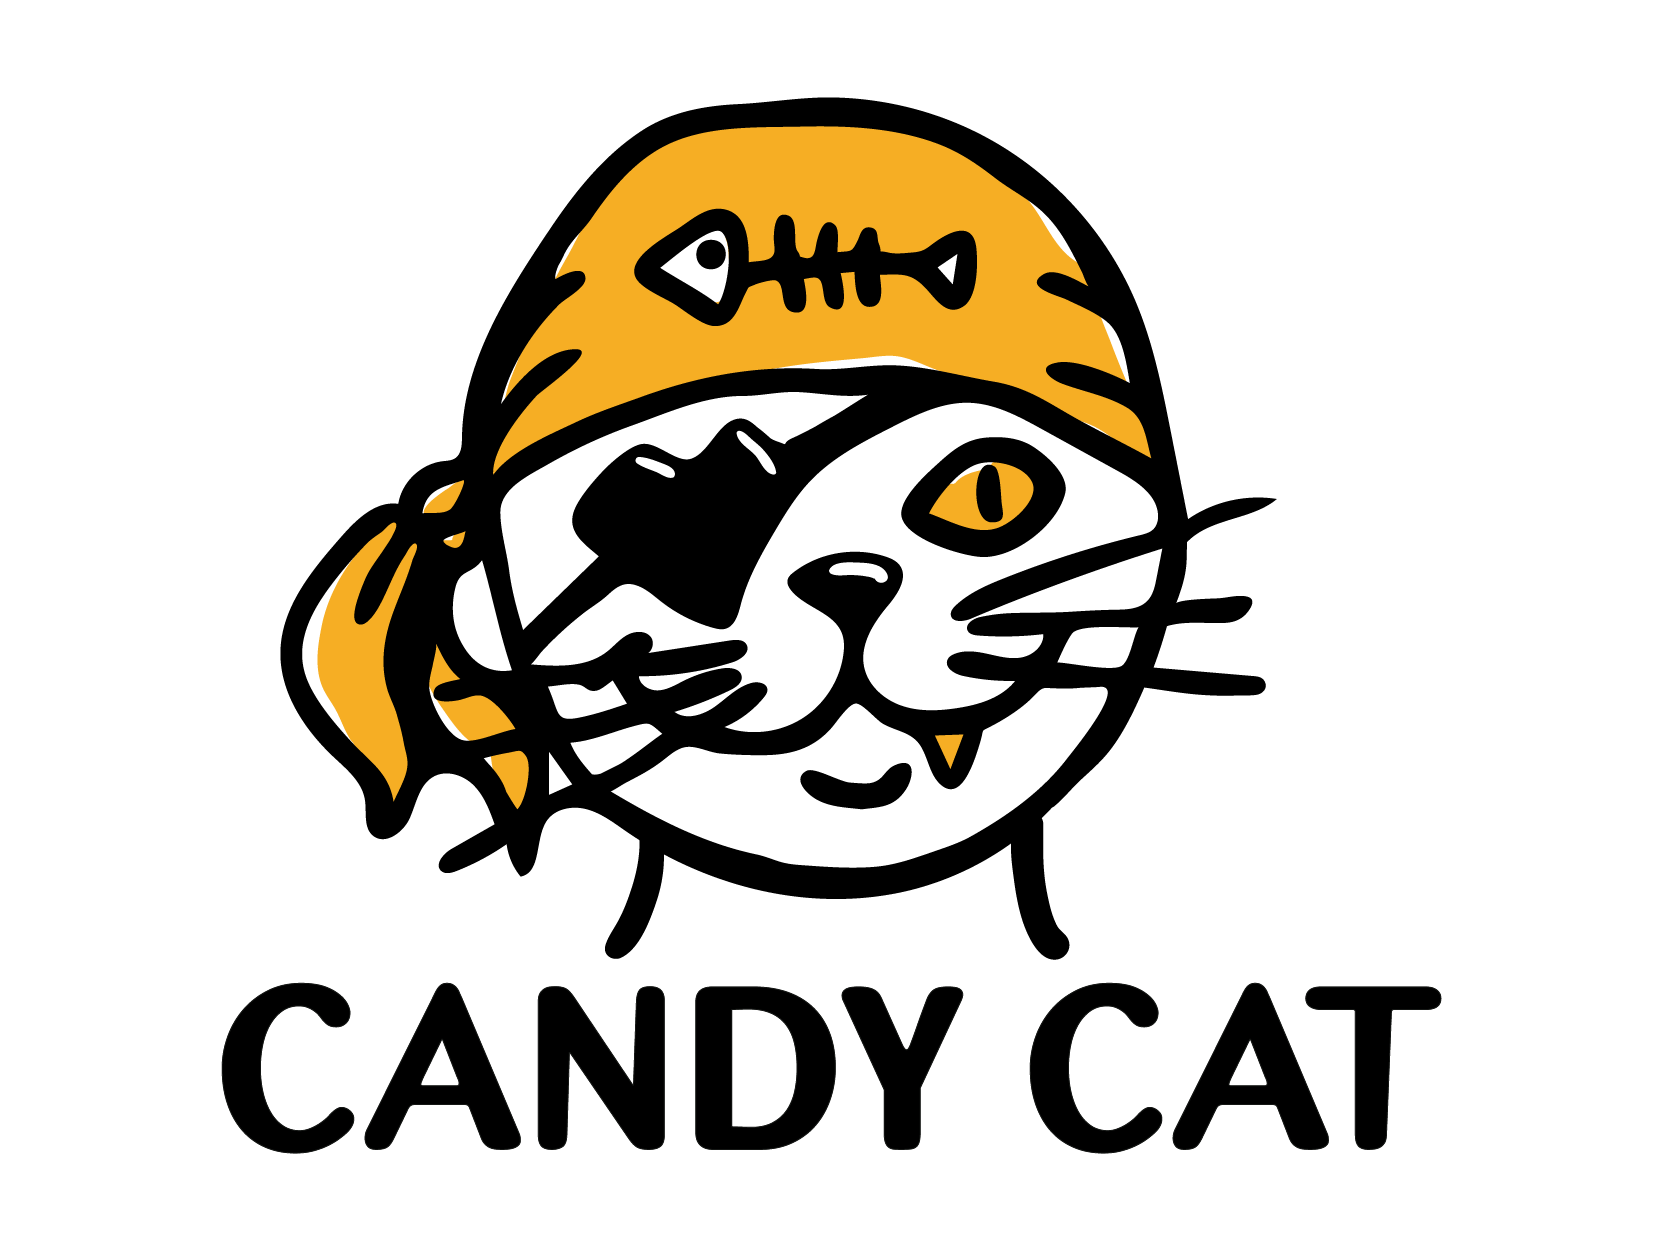 Candy cat